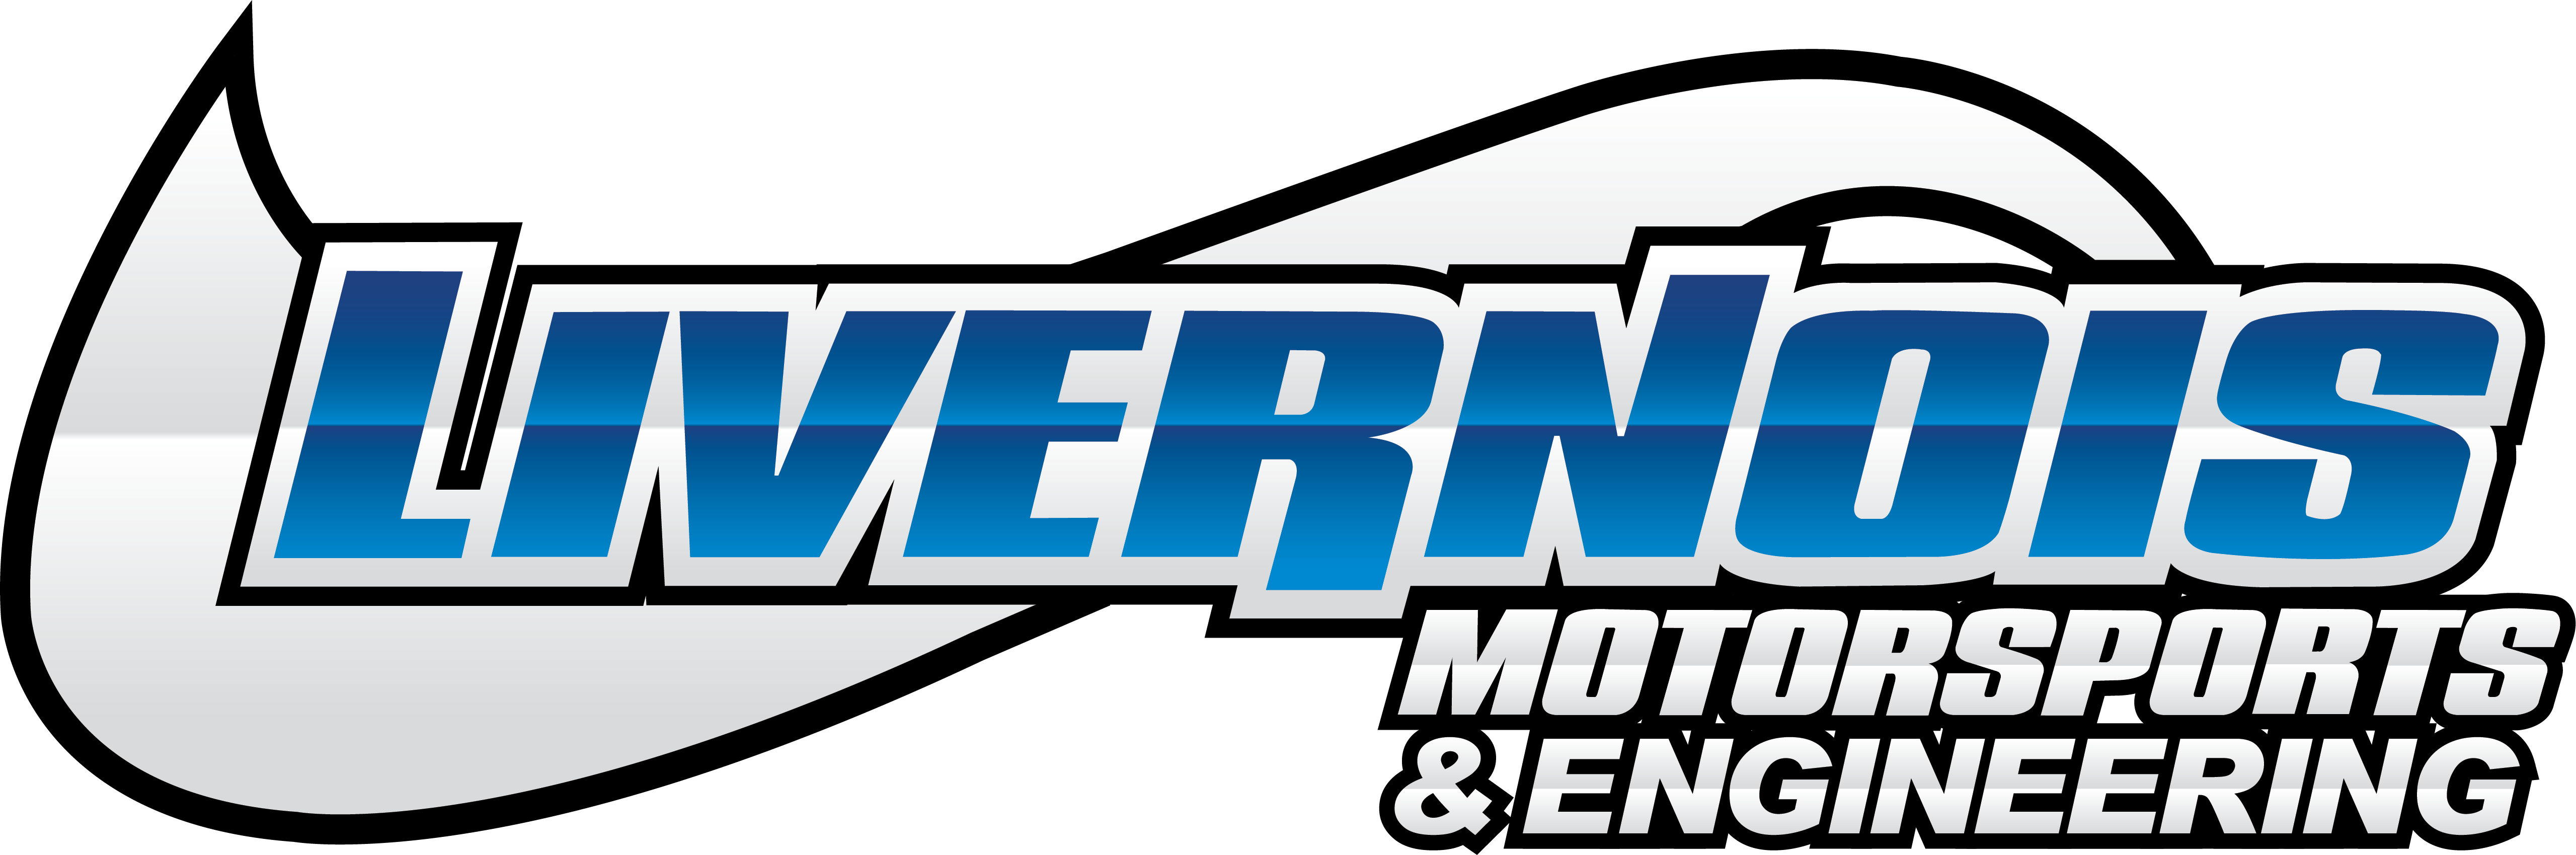 Livernois Motorsports & Engineering